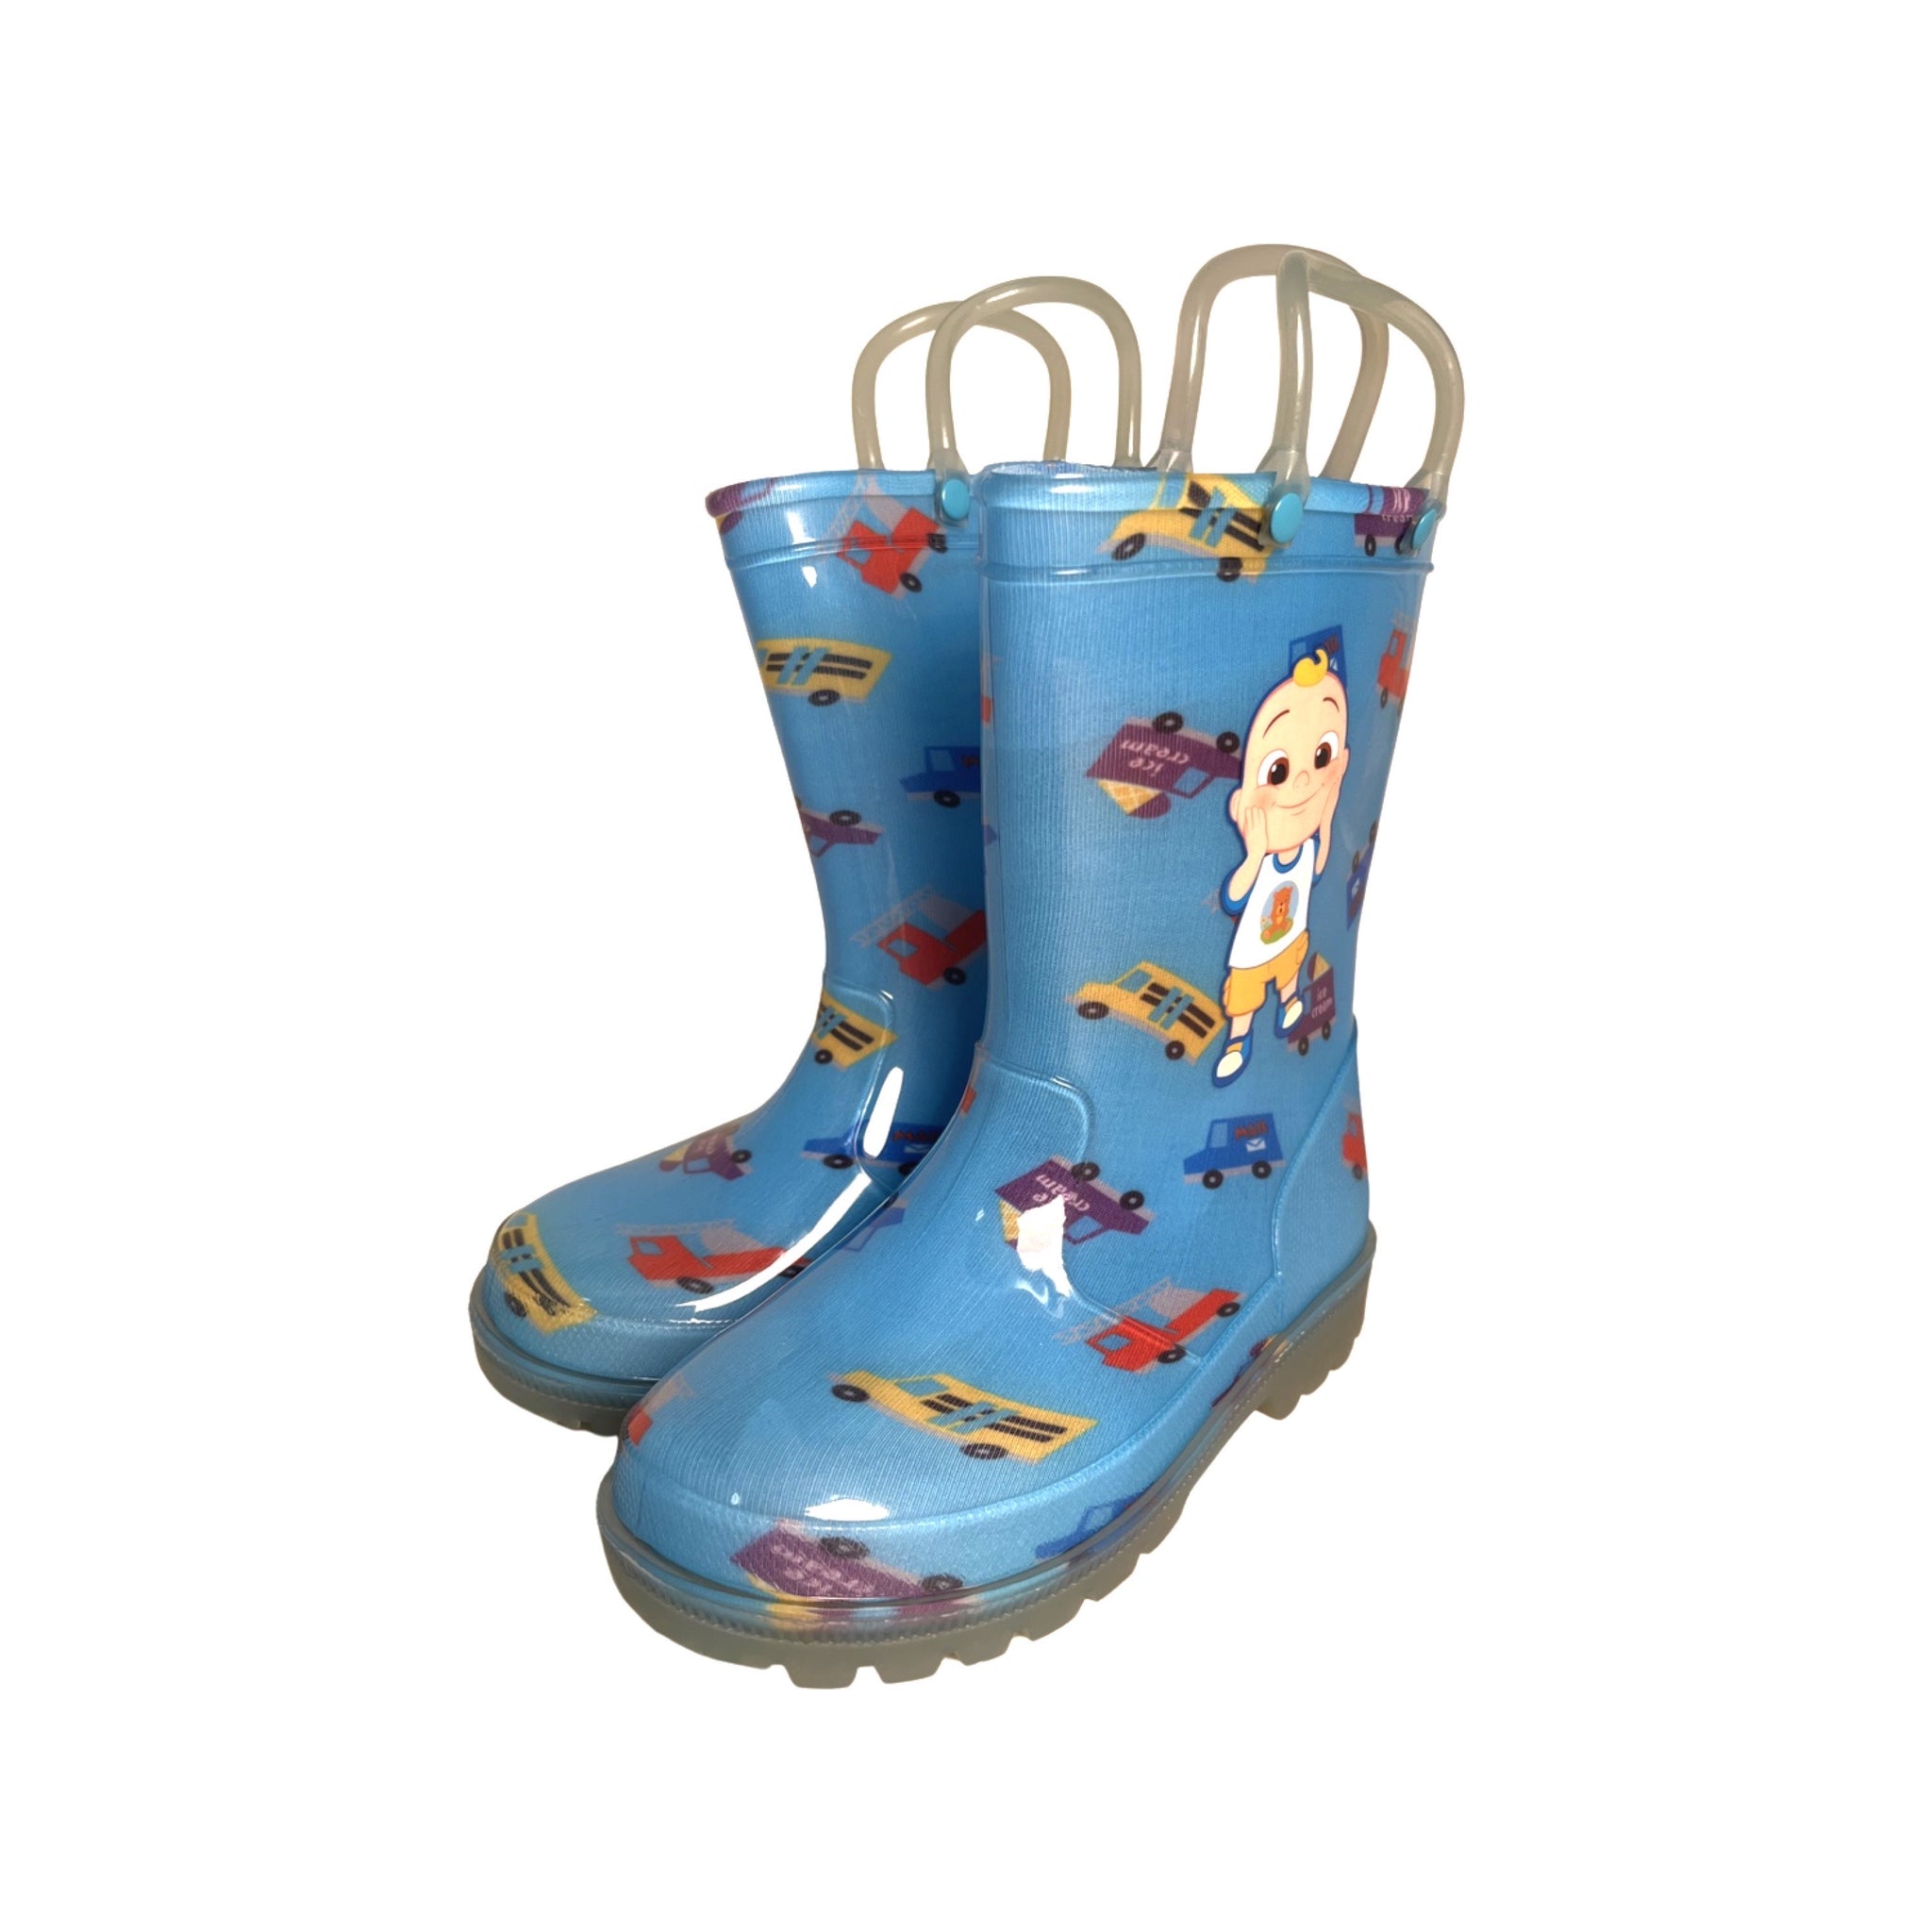 CoComelon Light Up Rain Boots - Blue